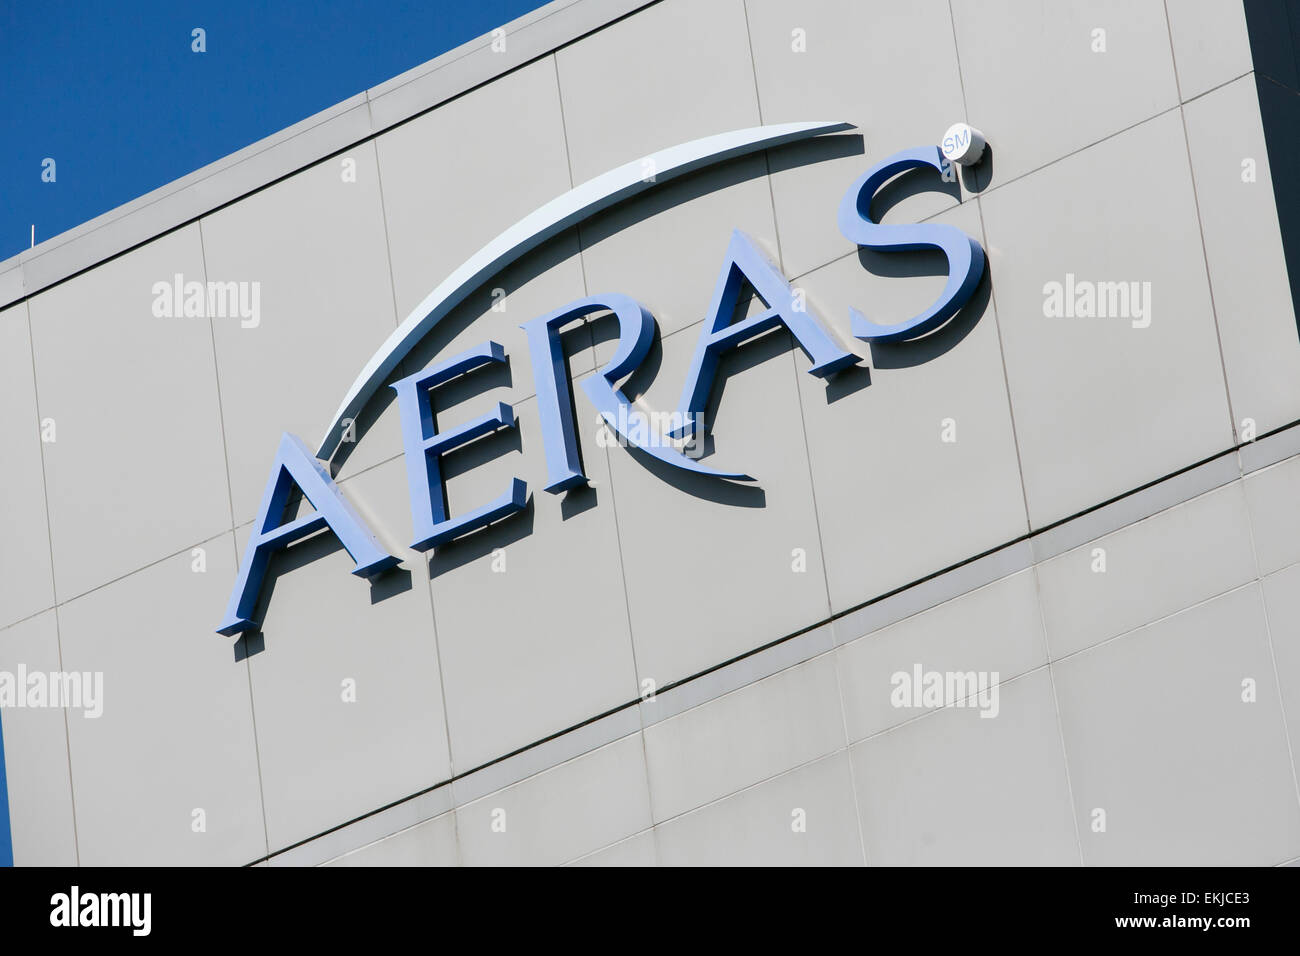 Das Hauptquartier der Biotechnologie-Firma Aeras. Stockfoto